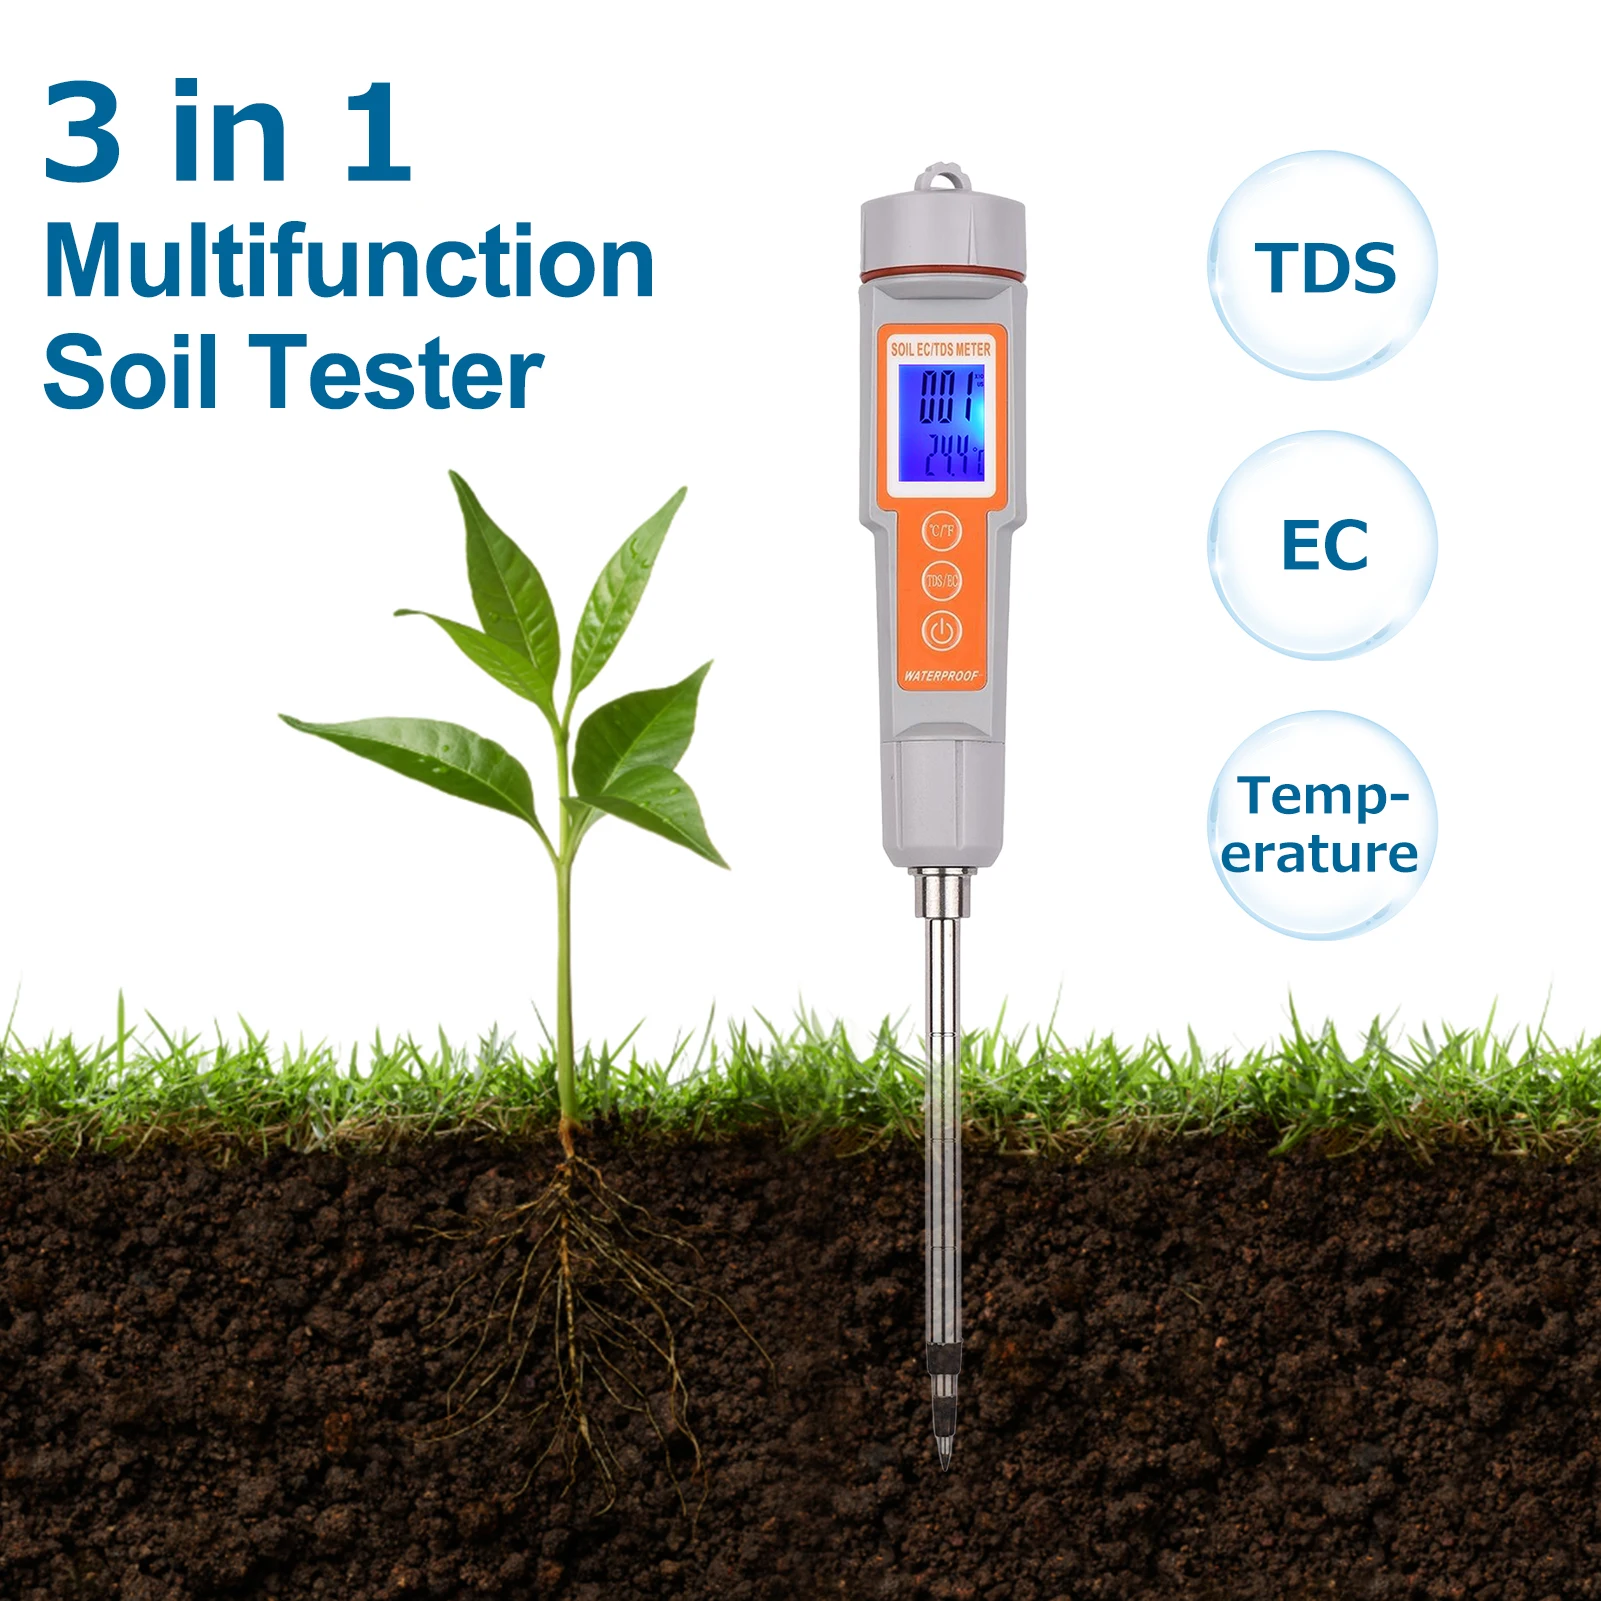 

Soil Tester 3 in 1 Multifunction EC/ TDS/ Temperature Digital Soil Test Probe Meter with Backlight Screen Portable